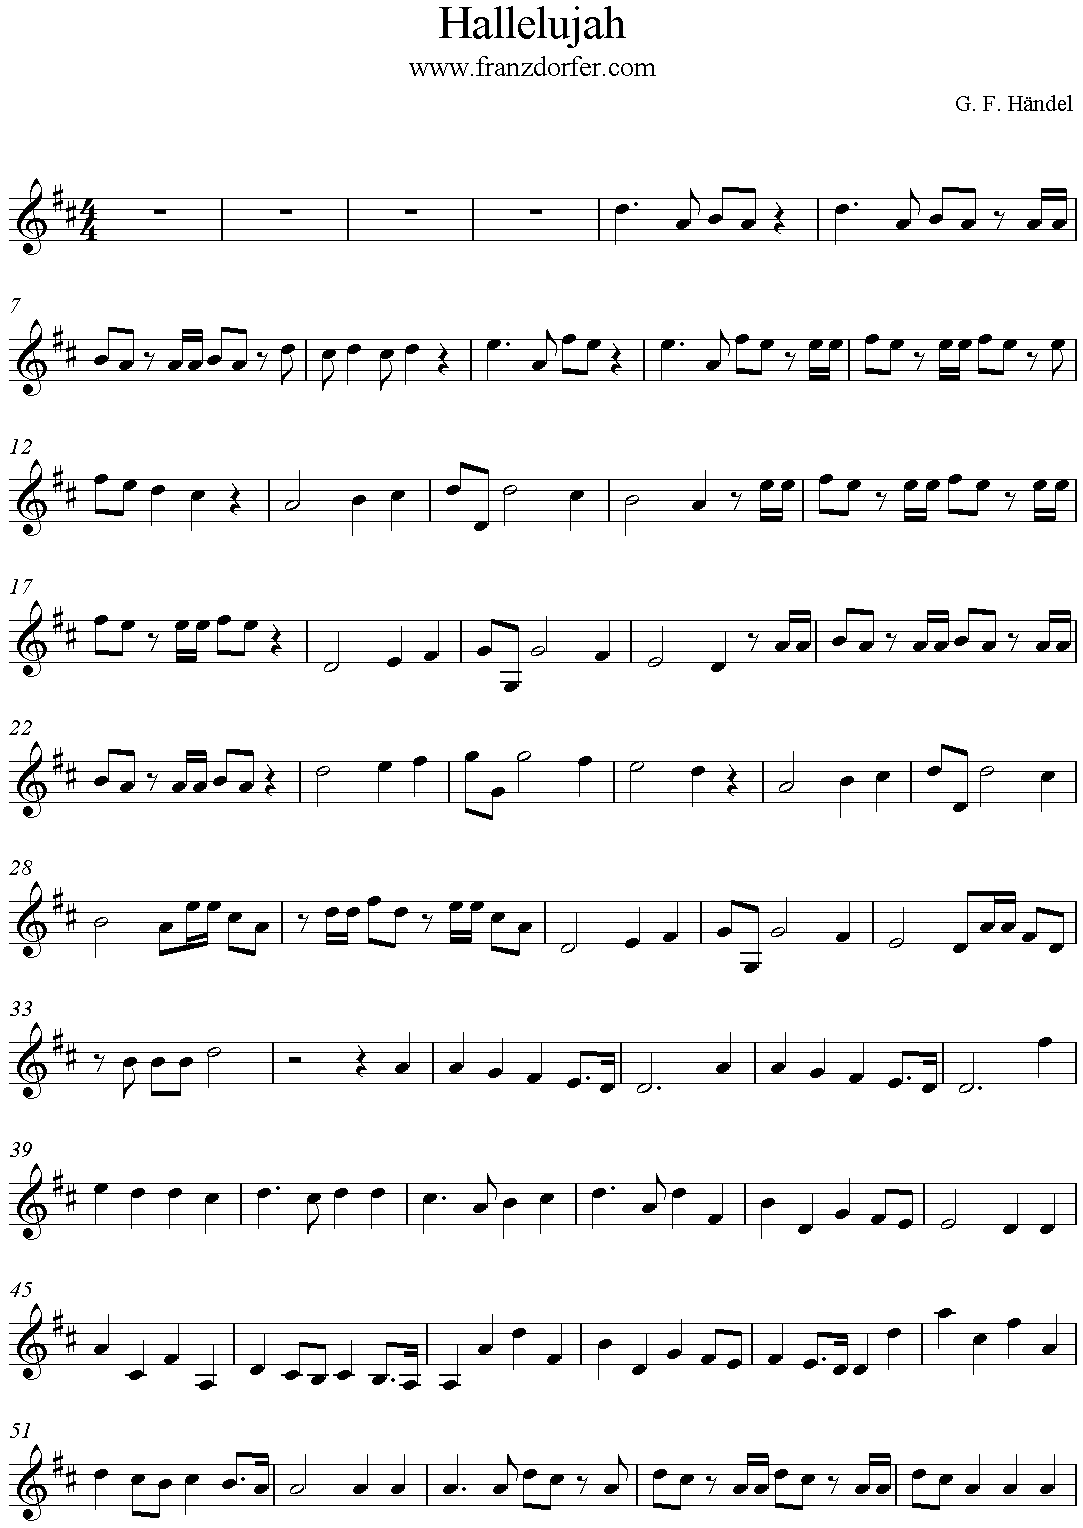 Noten Händel Hallelujah 1